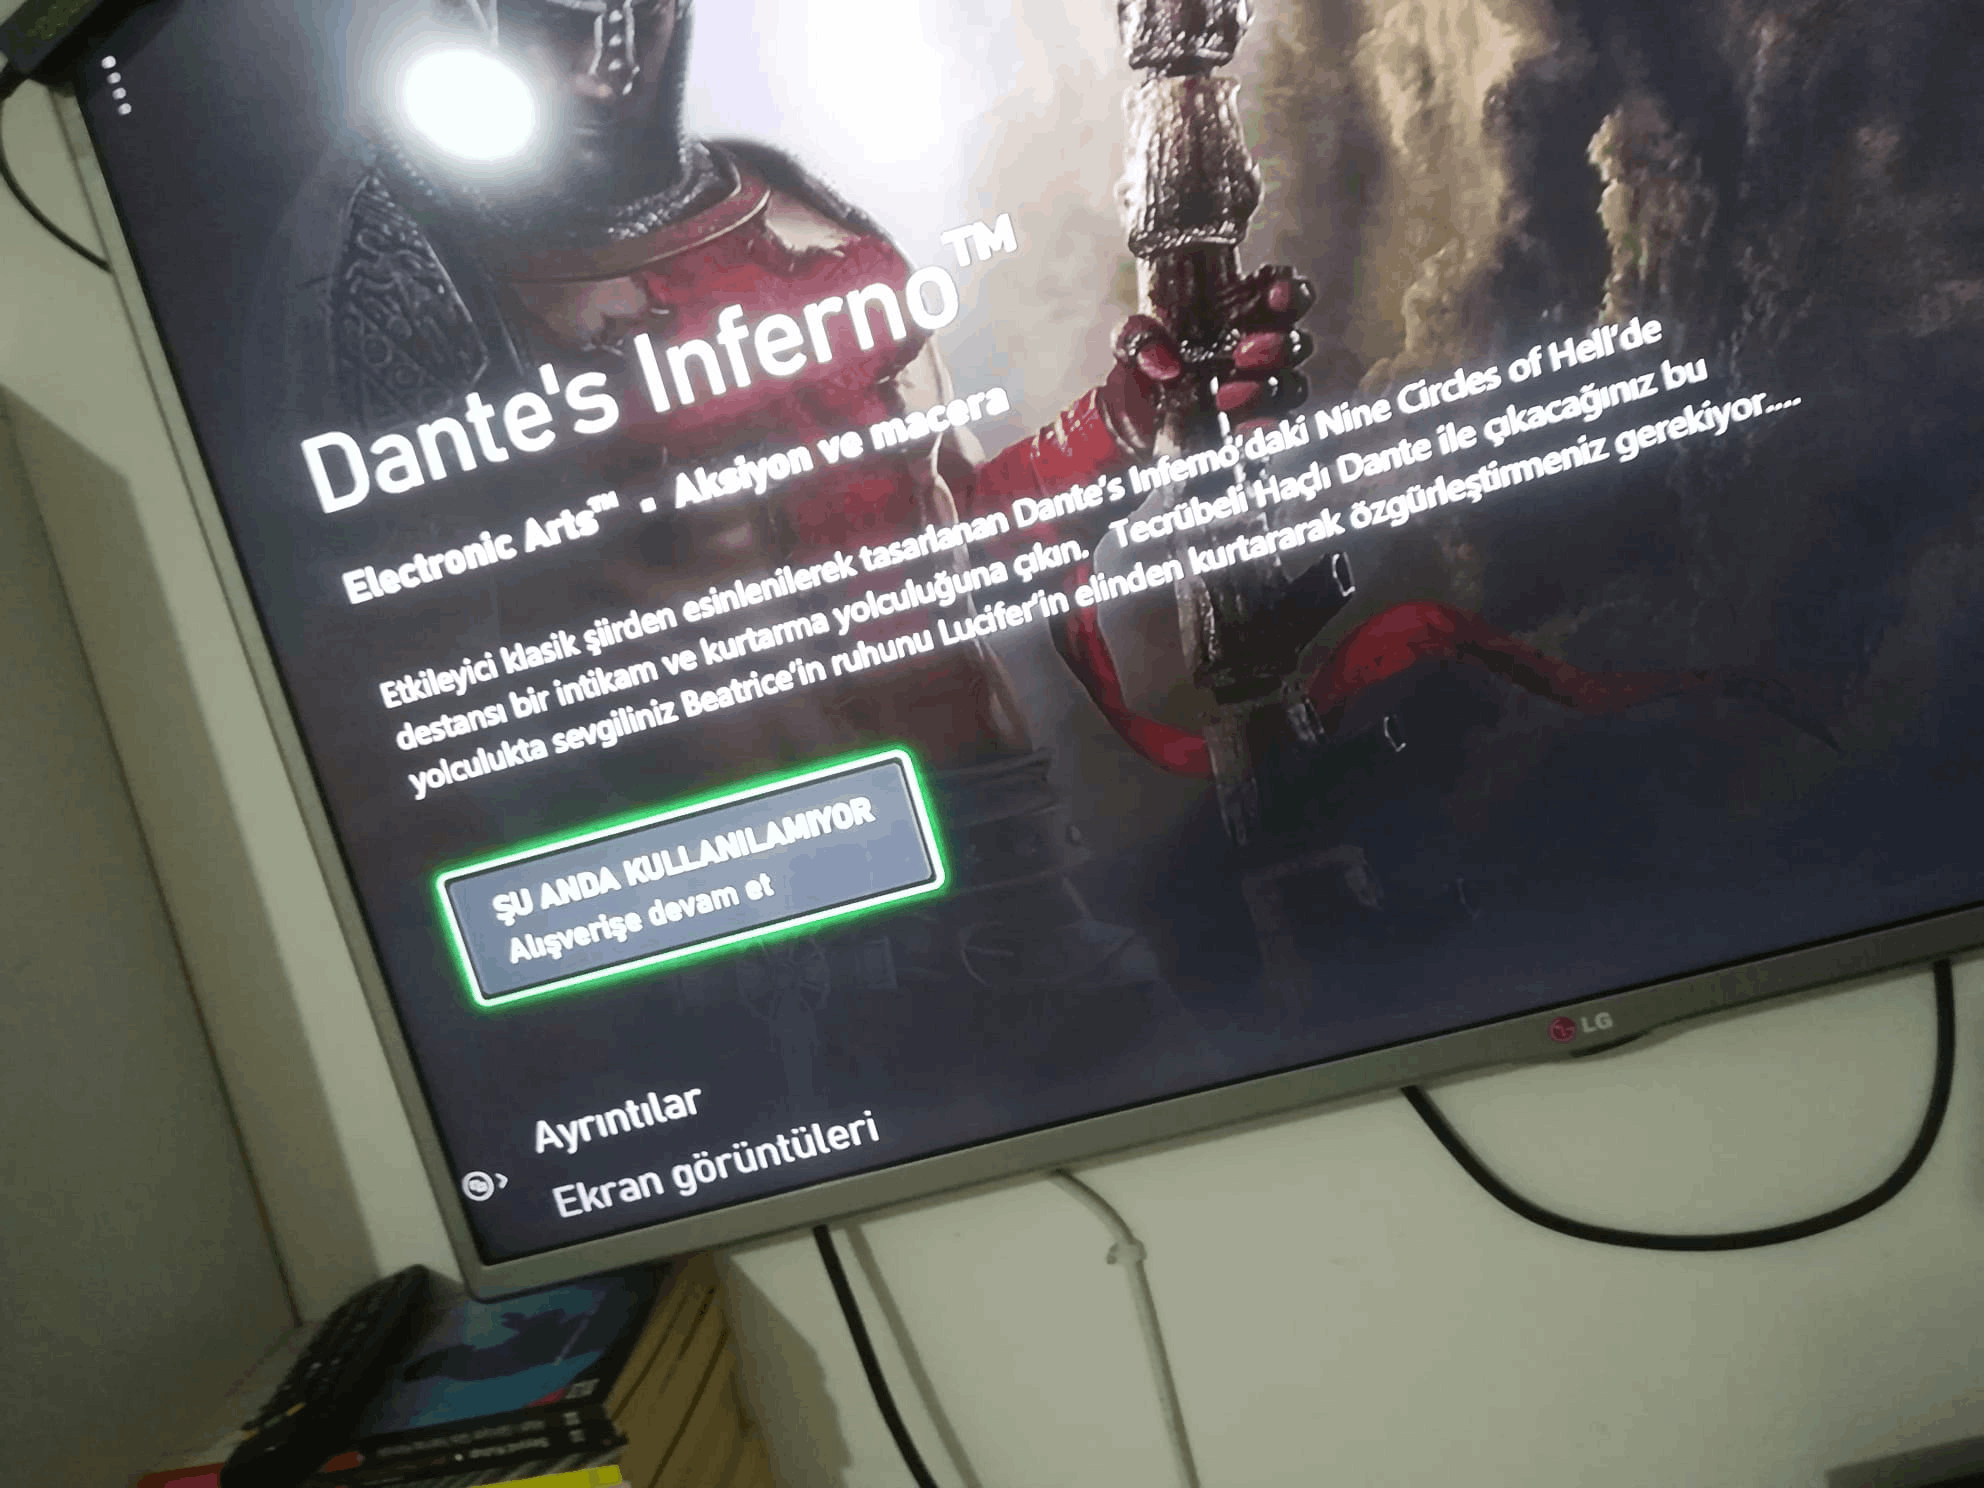 Buy Dante's Inferno - Microsoft Store